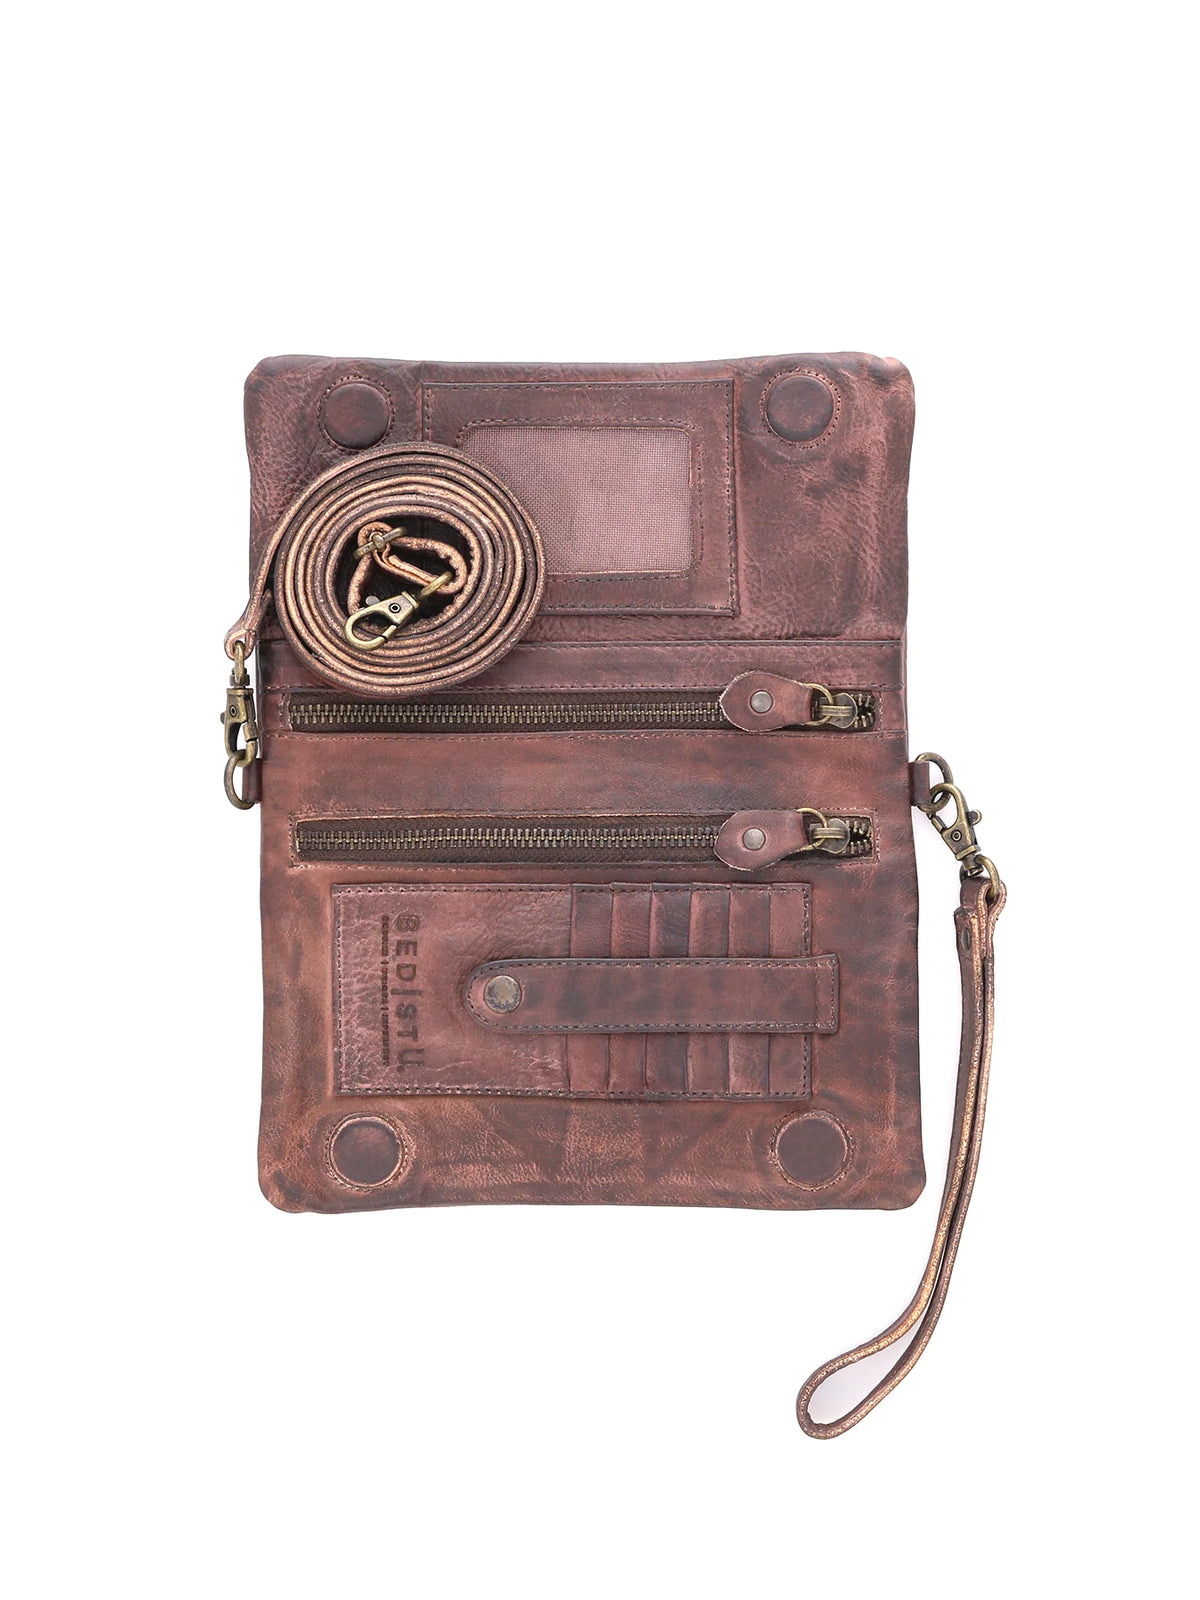 BEDSTU cadence convertible crossbody clutch wallet in teak rustic leather